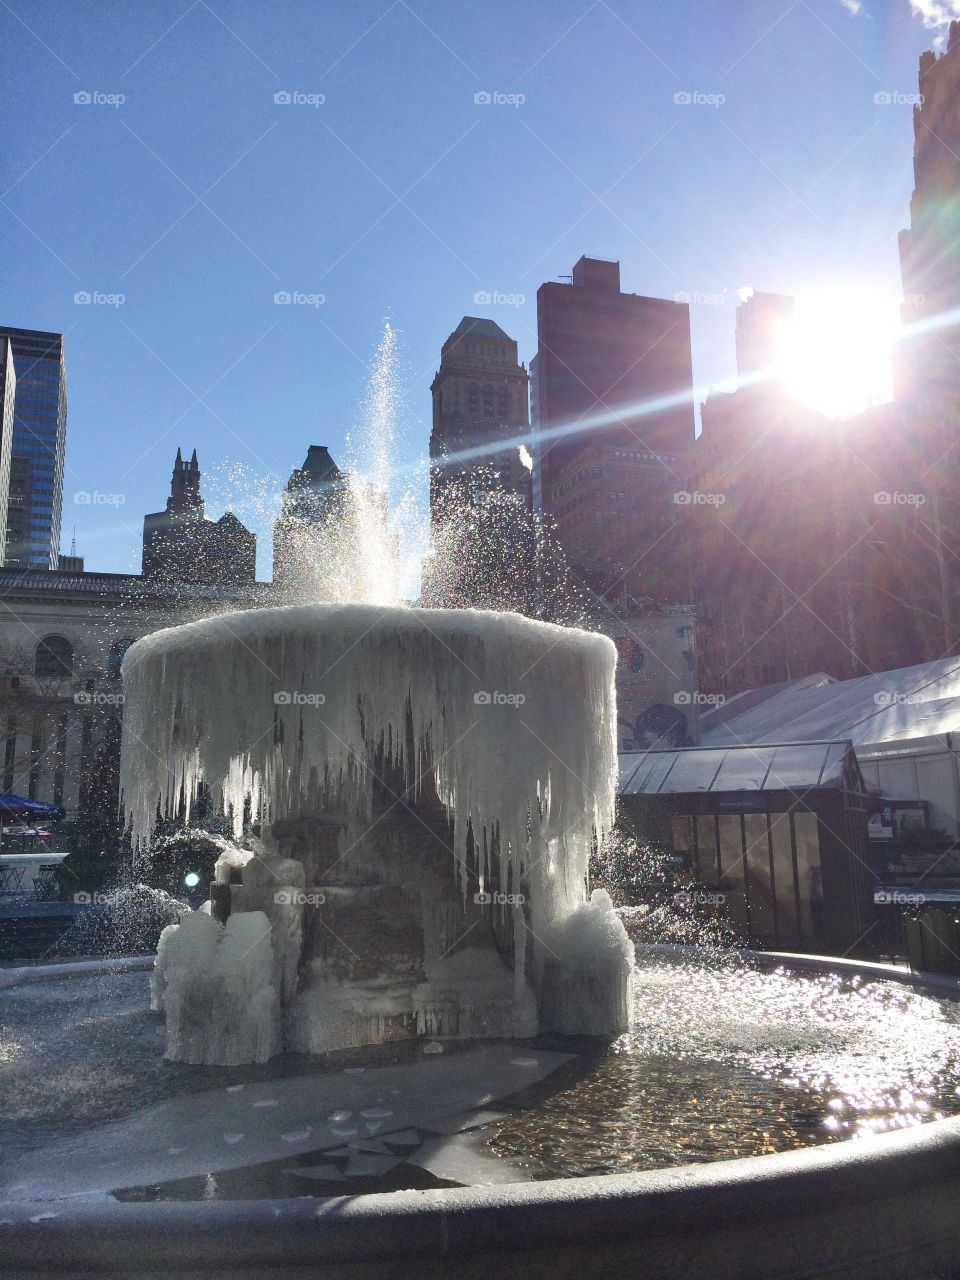 Frozen Fountain!